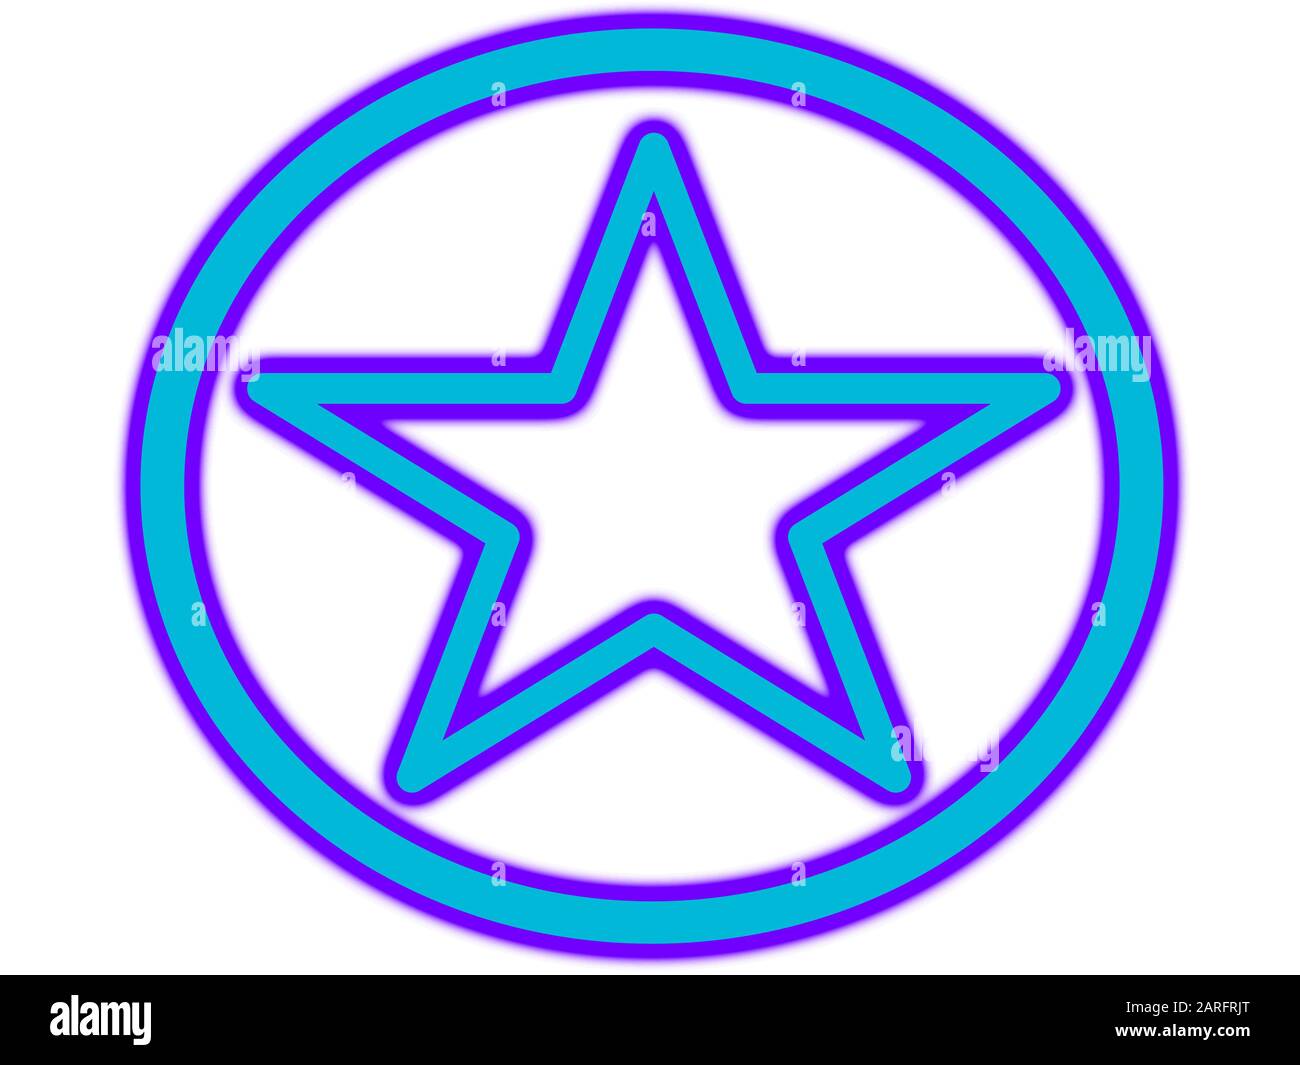 Blue and Purple pentagram pentacle wiccan symbol Stock Photo